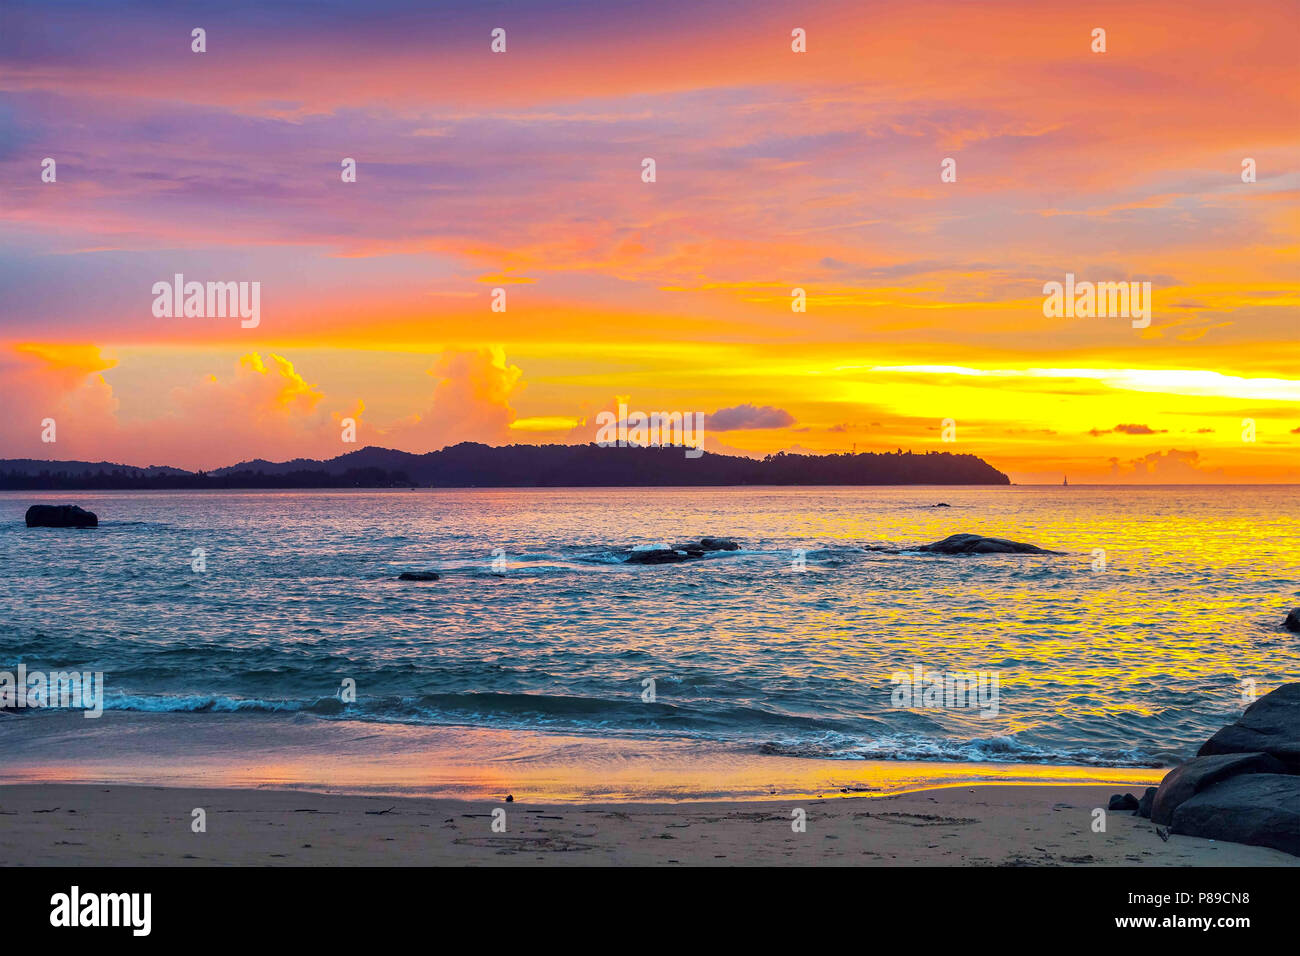 Sonnenuntergang über dem Meer in Thailand. Stockfoto